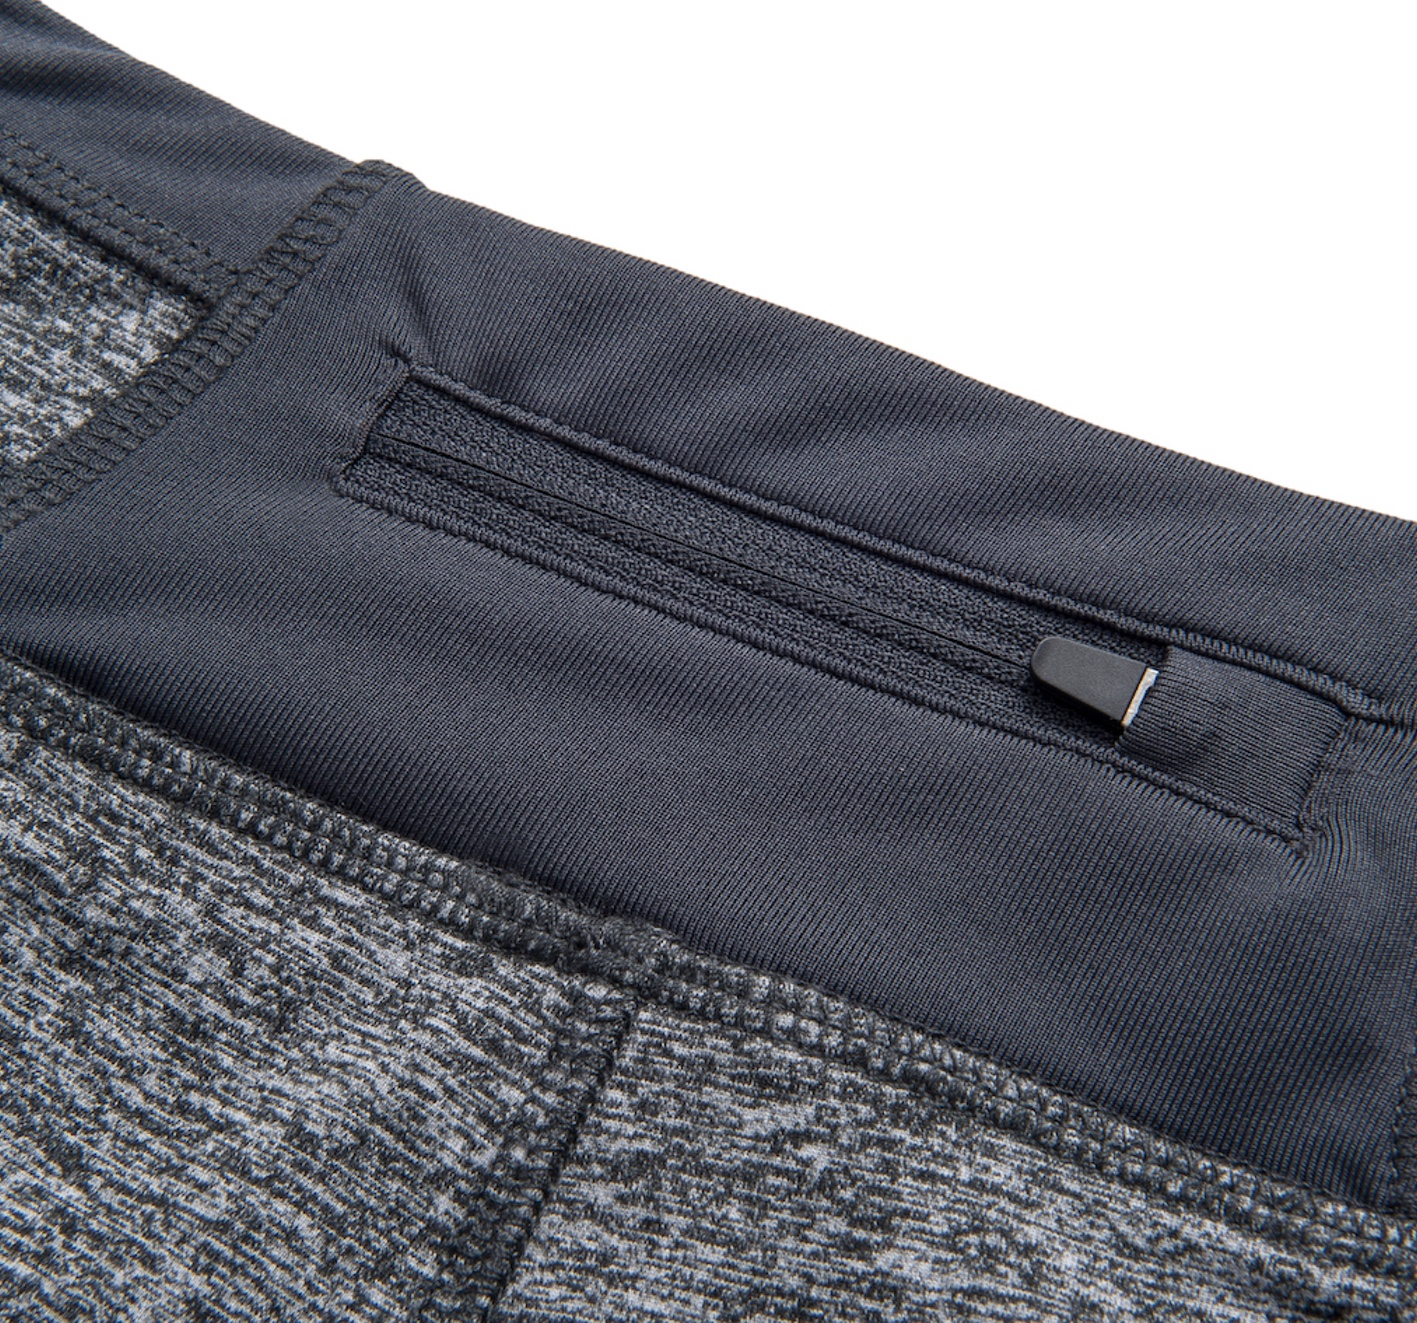 Pantalones cortos deportivos de compresión para correr con bolsillo con cremallera